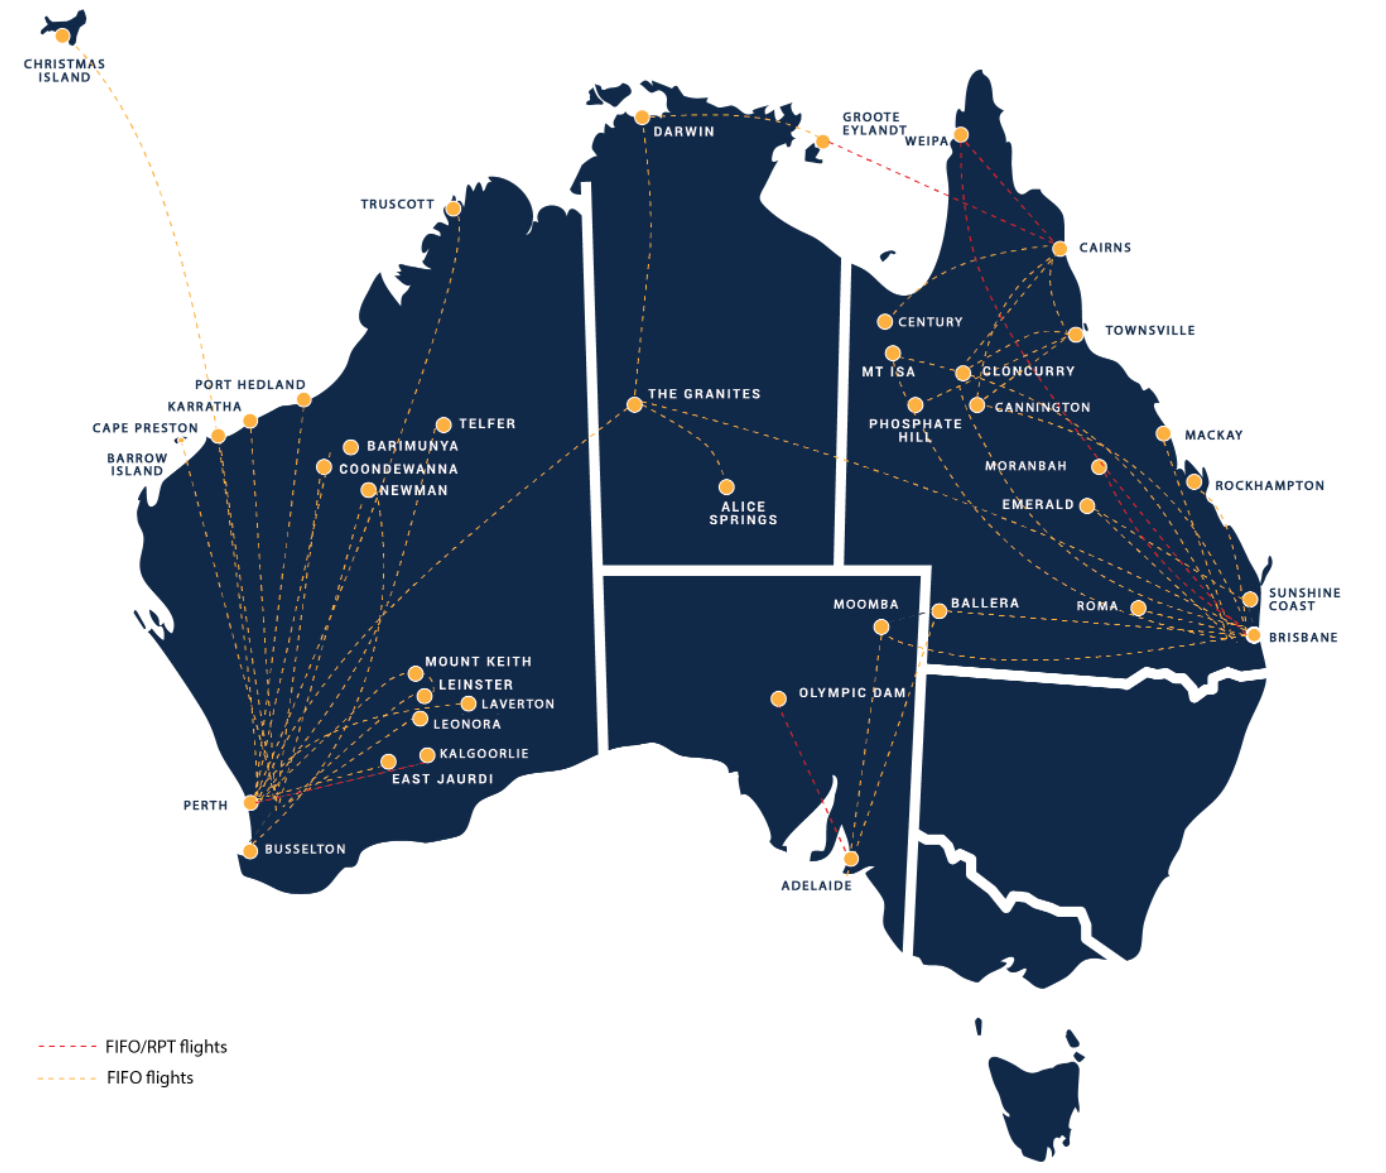 (Source: Alliance Aviation) map detailing Alliance's flight routes through Australia